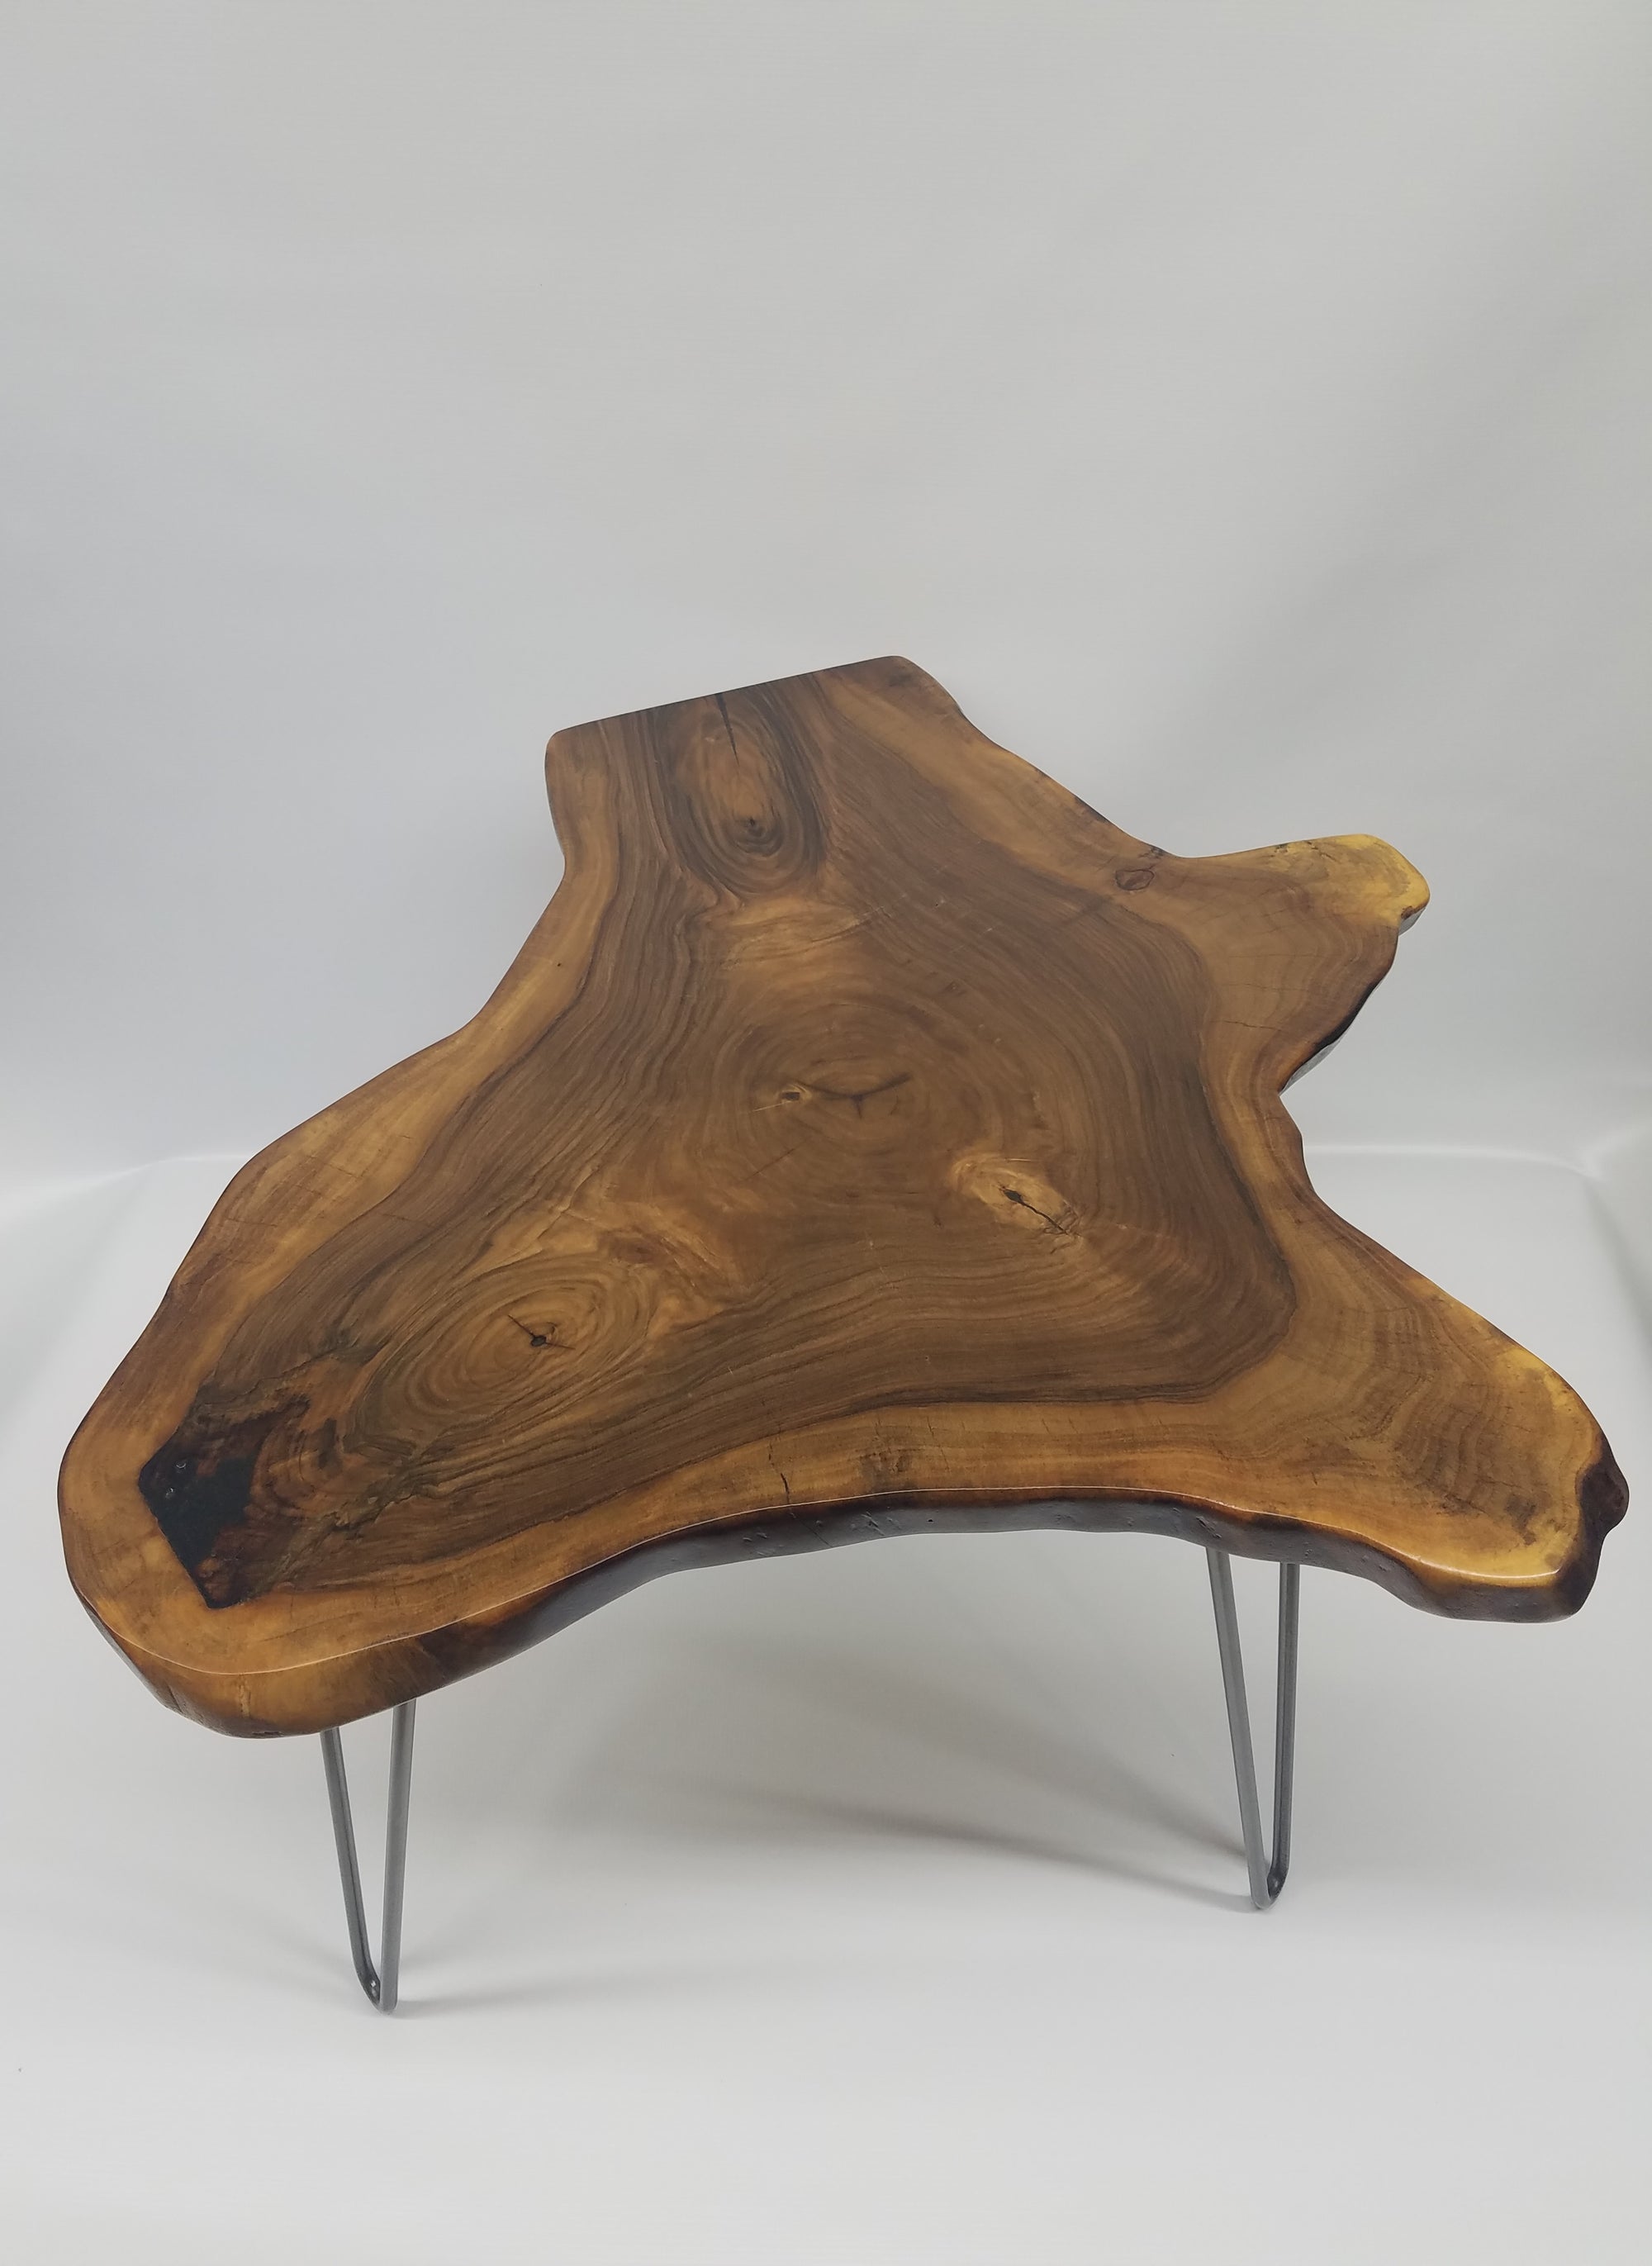 Live Edge Coffee Table- English Walnut- Tree Slice- Organic Shape- Natural Wood- Round Table- Mid Century- Modern- Rustic- Dark Wood- Cool